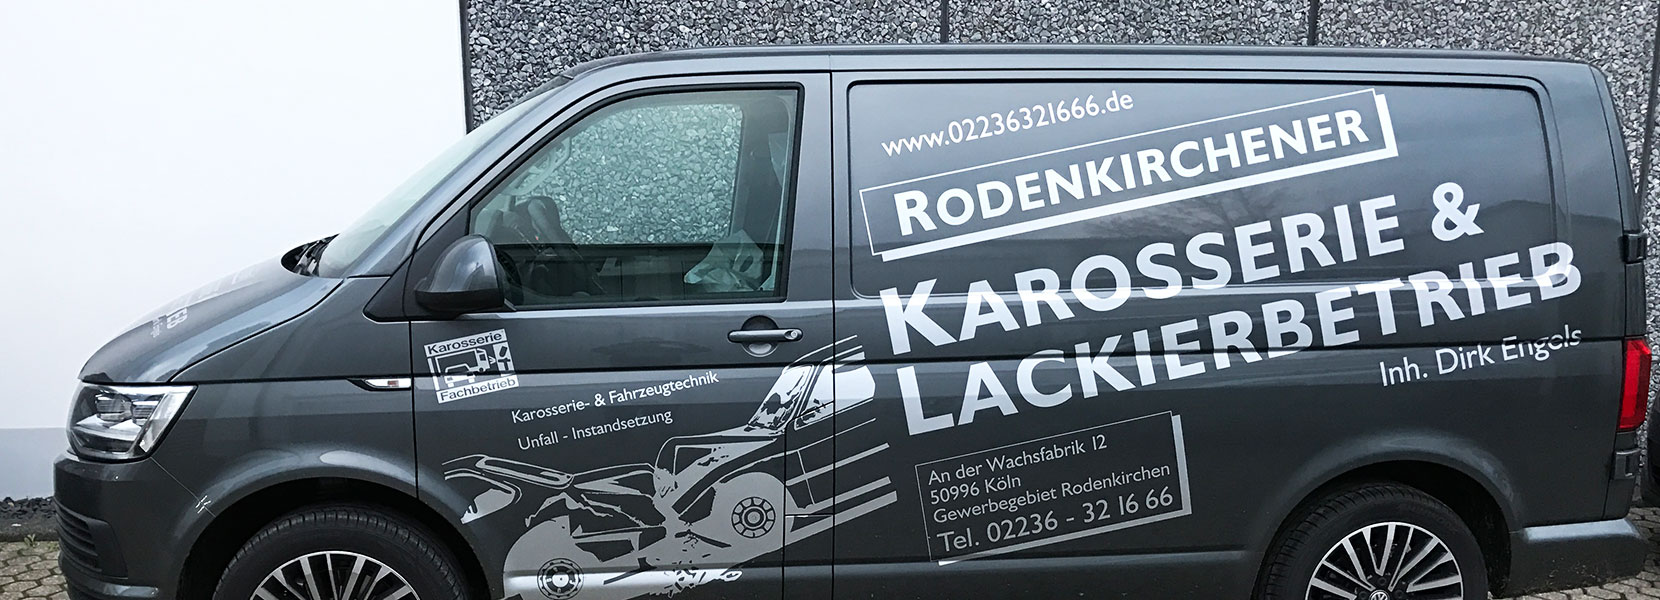 Rodenkirchener Karosserie & Lackierbetrieb - Firmen Van